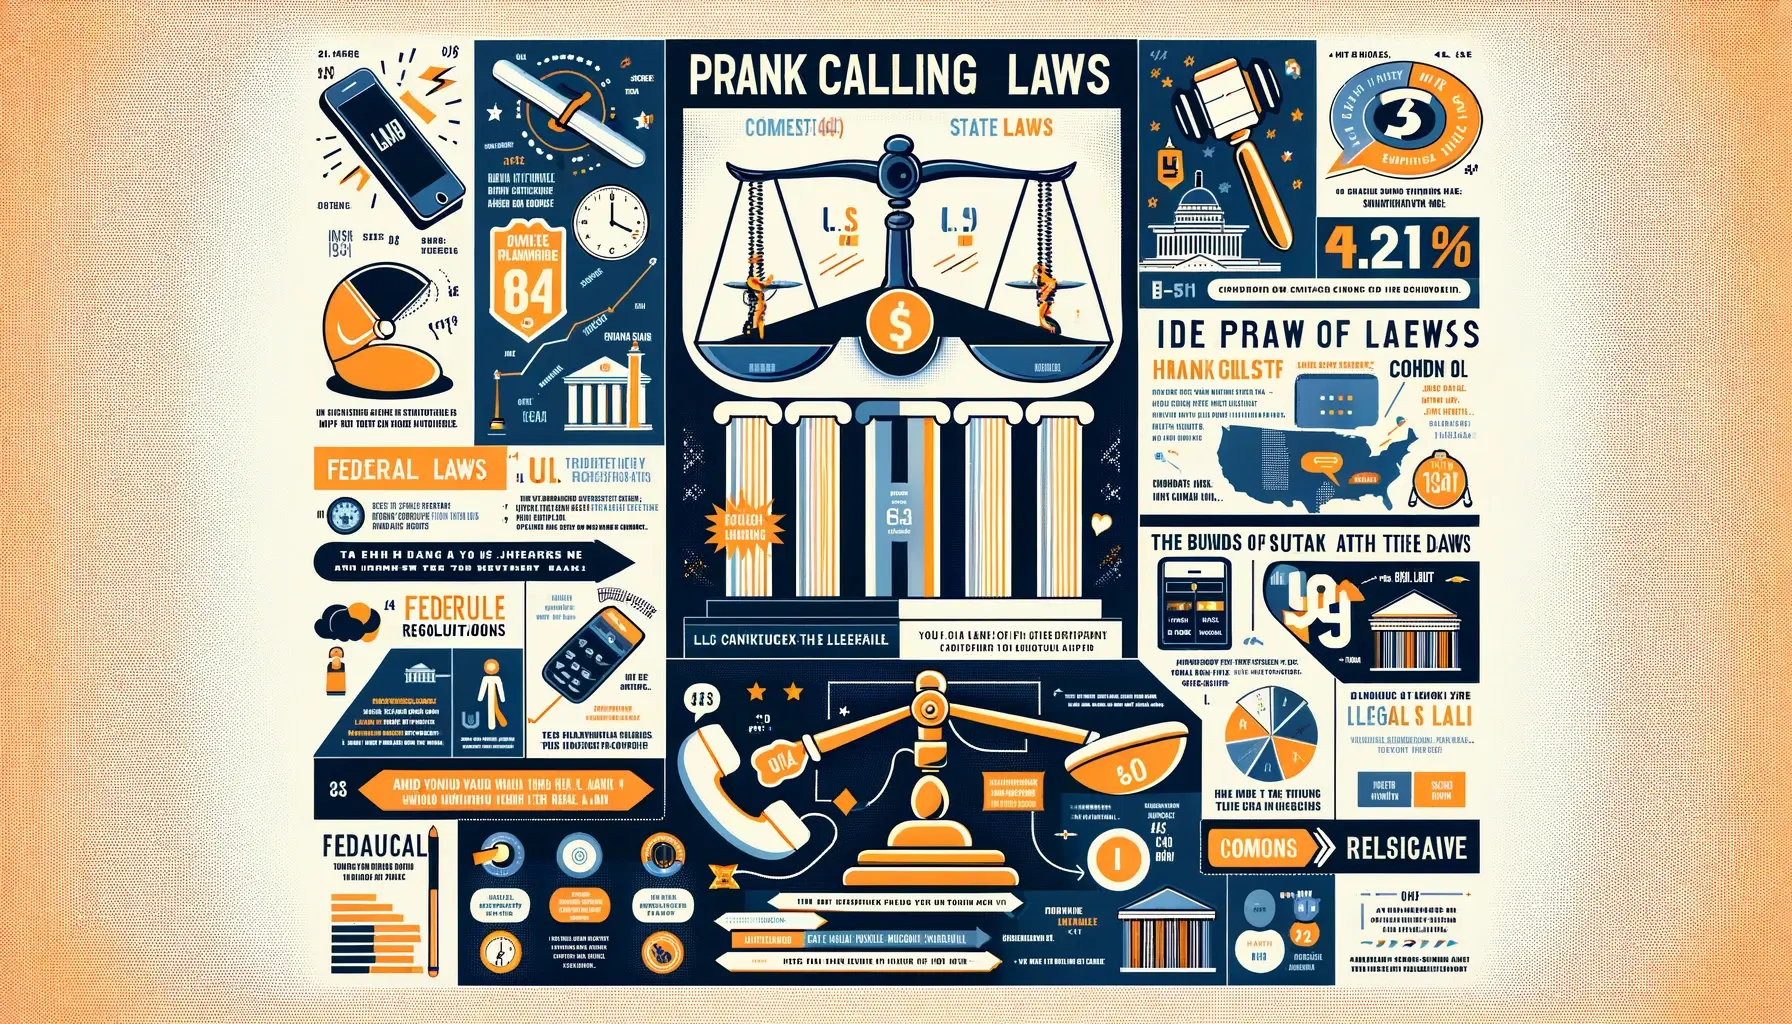 Is Prank Calling illegal